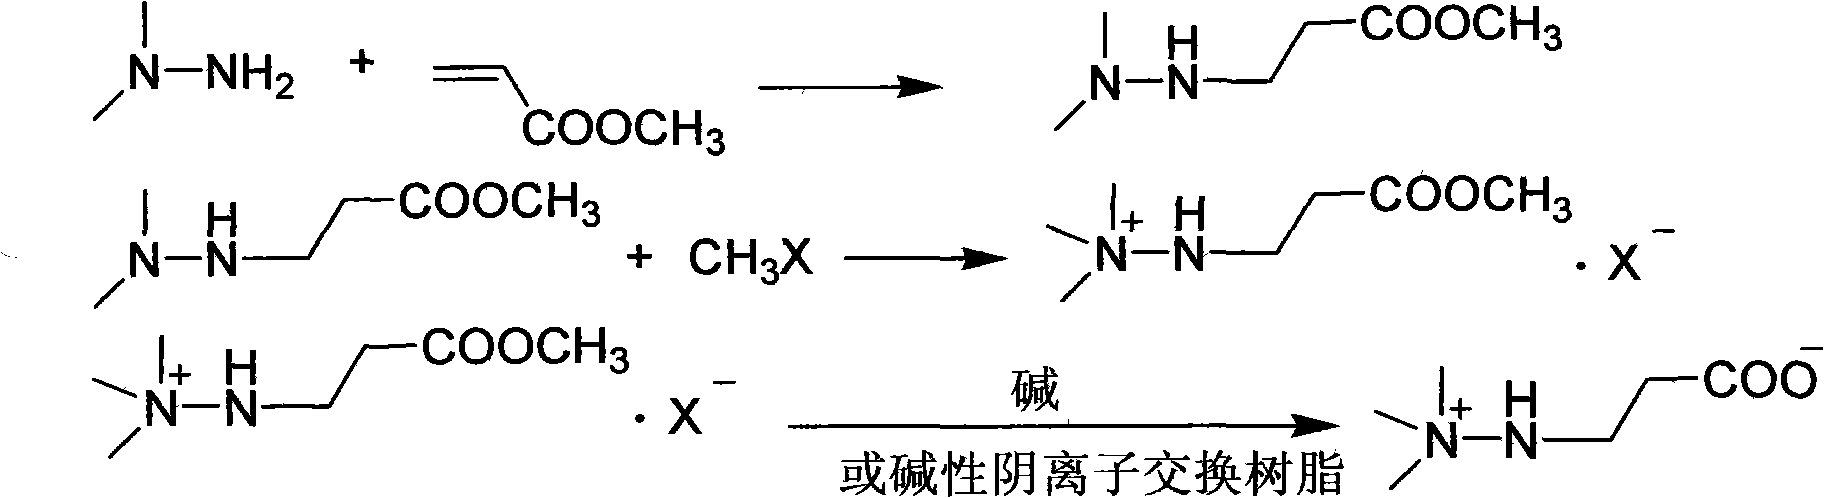 Preparation method of 3-(2,2,2-trimethylhydrazine)propionate dihydrate